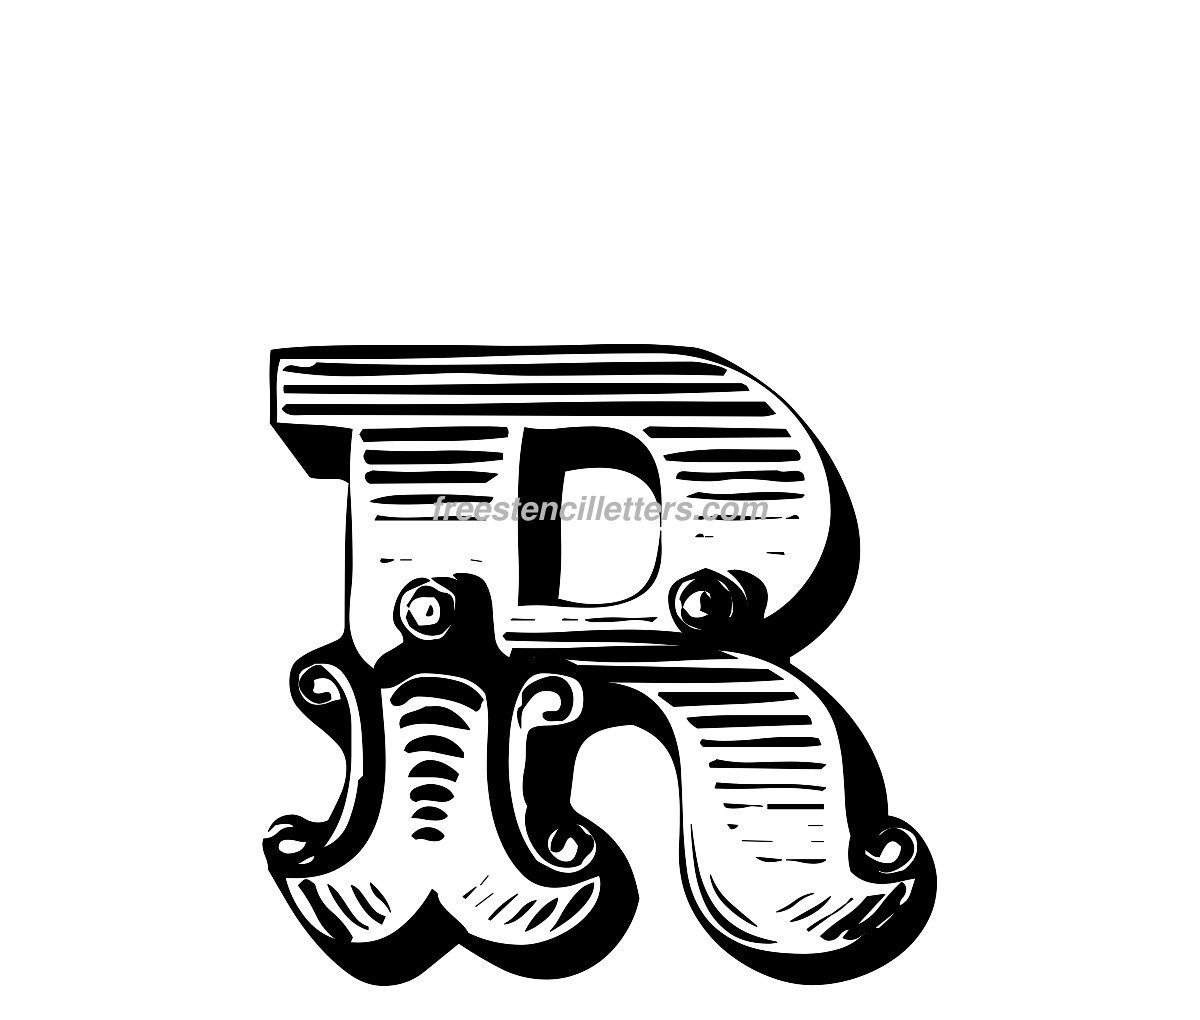 Print R Letter Stencil